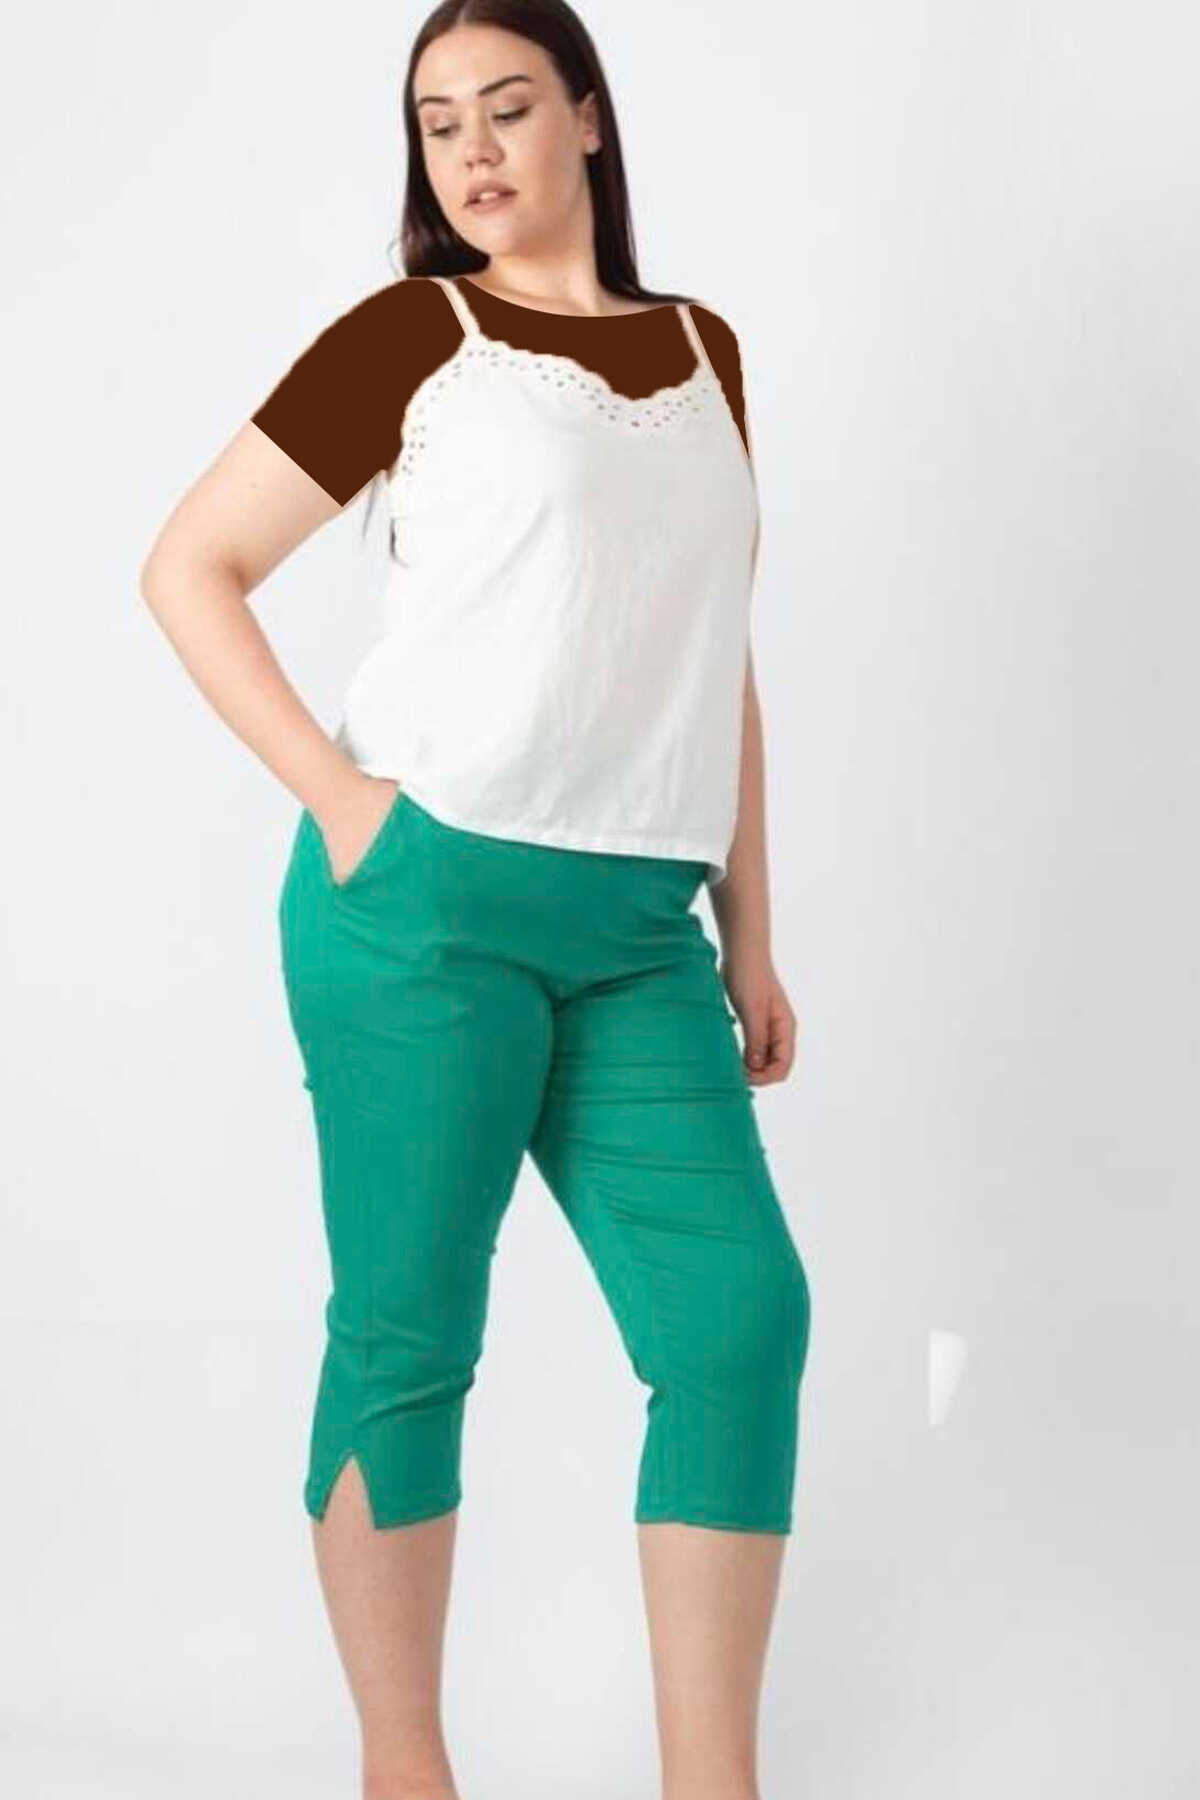 شلوارک کاپری کمر کش جیب دار چاک دار سایز بزرگ زنانه سبز